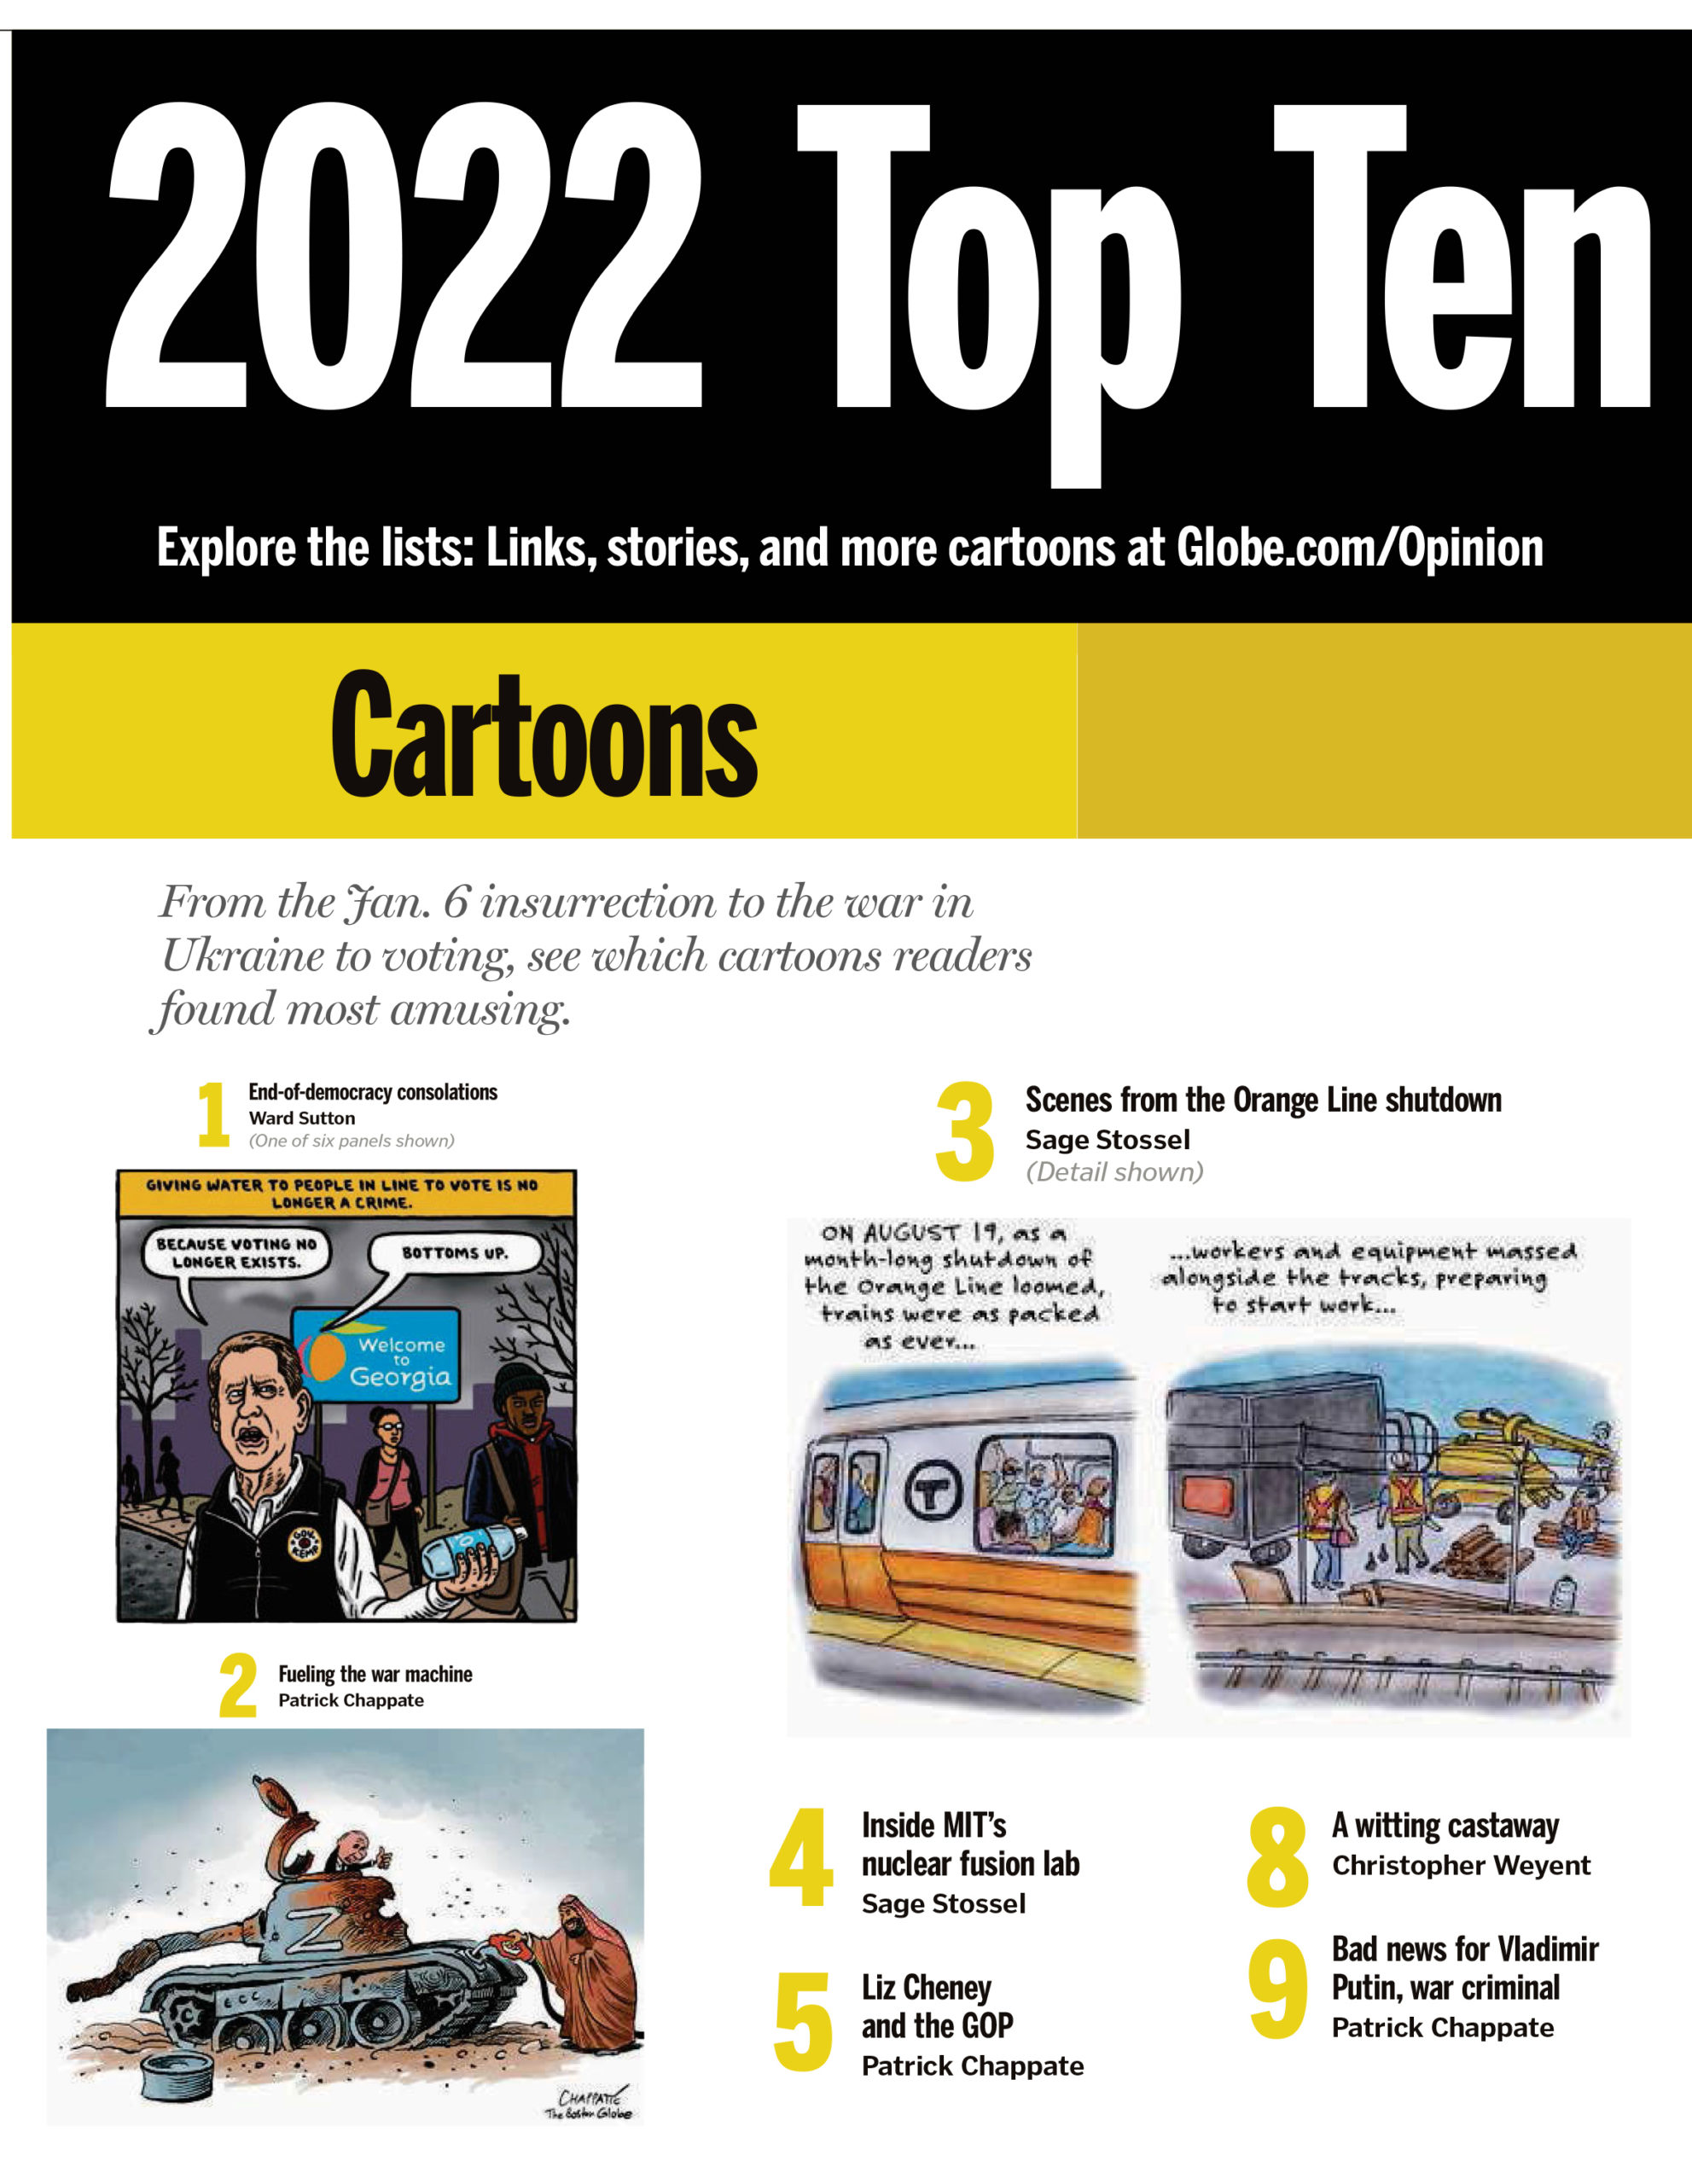 Boston Globe, 2022, top 10, cartoon, sage stossel